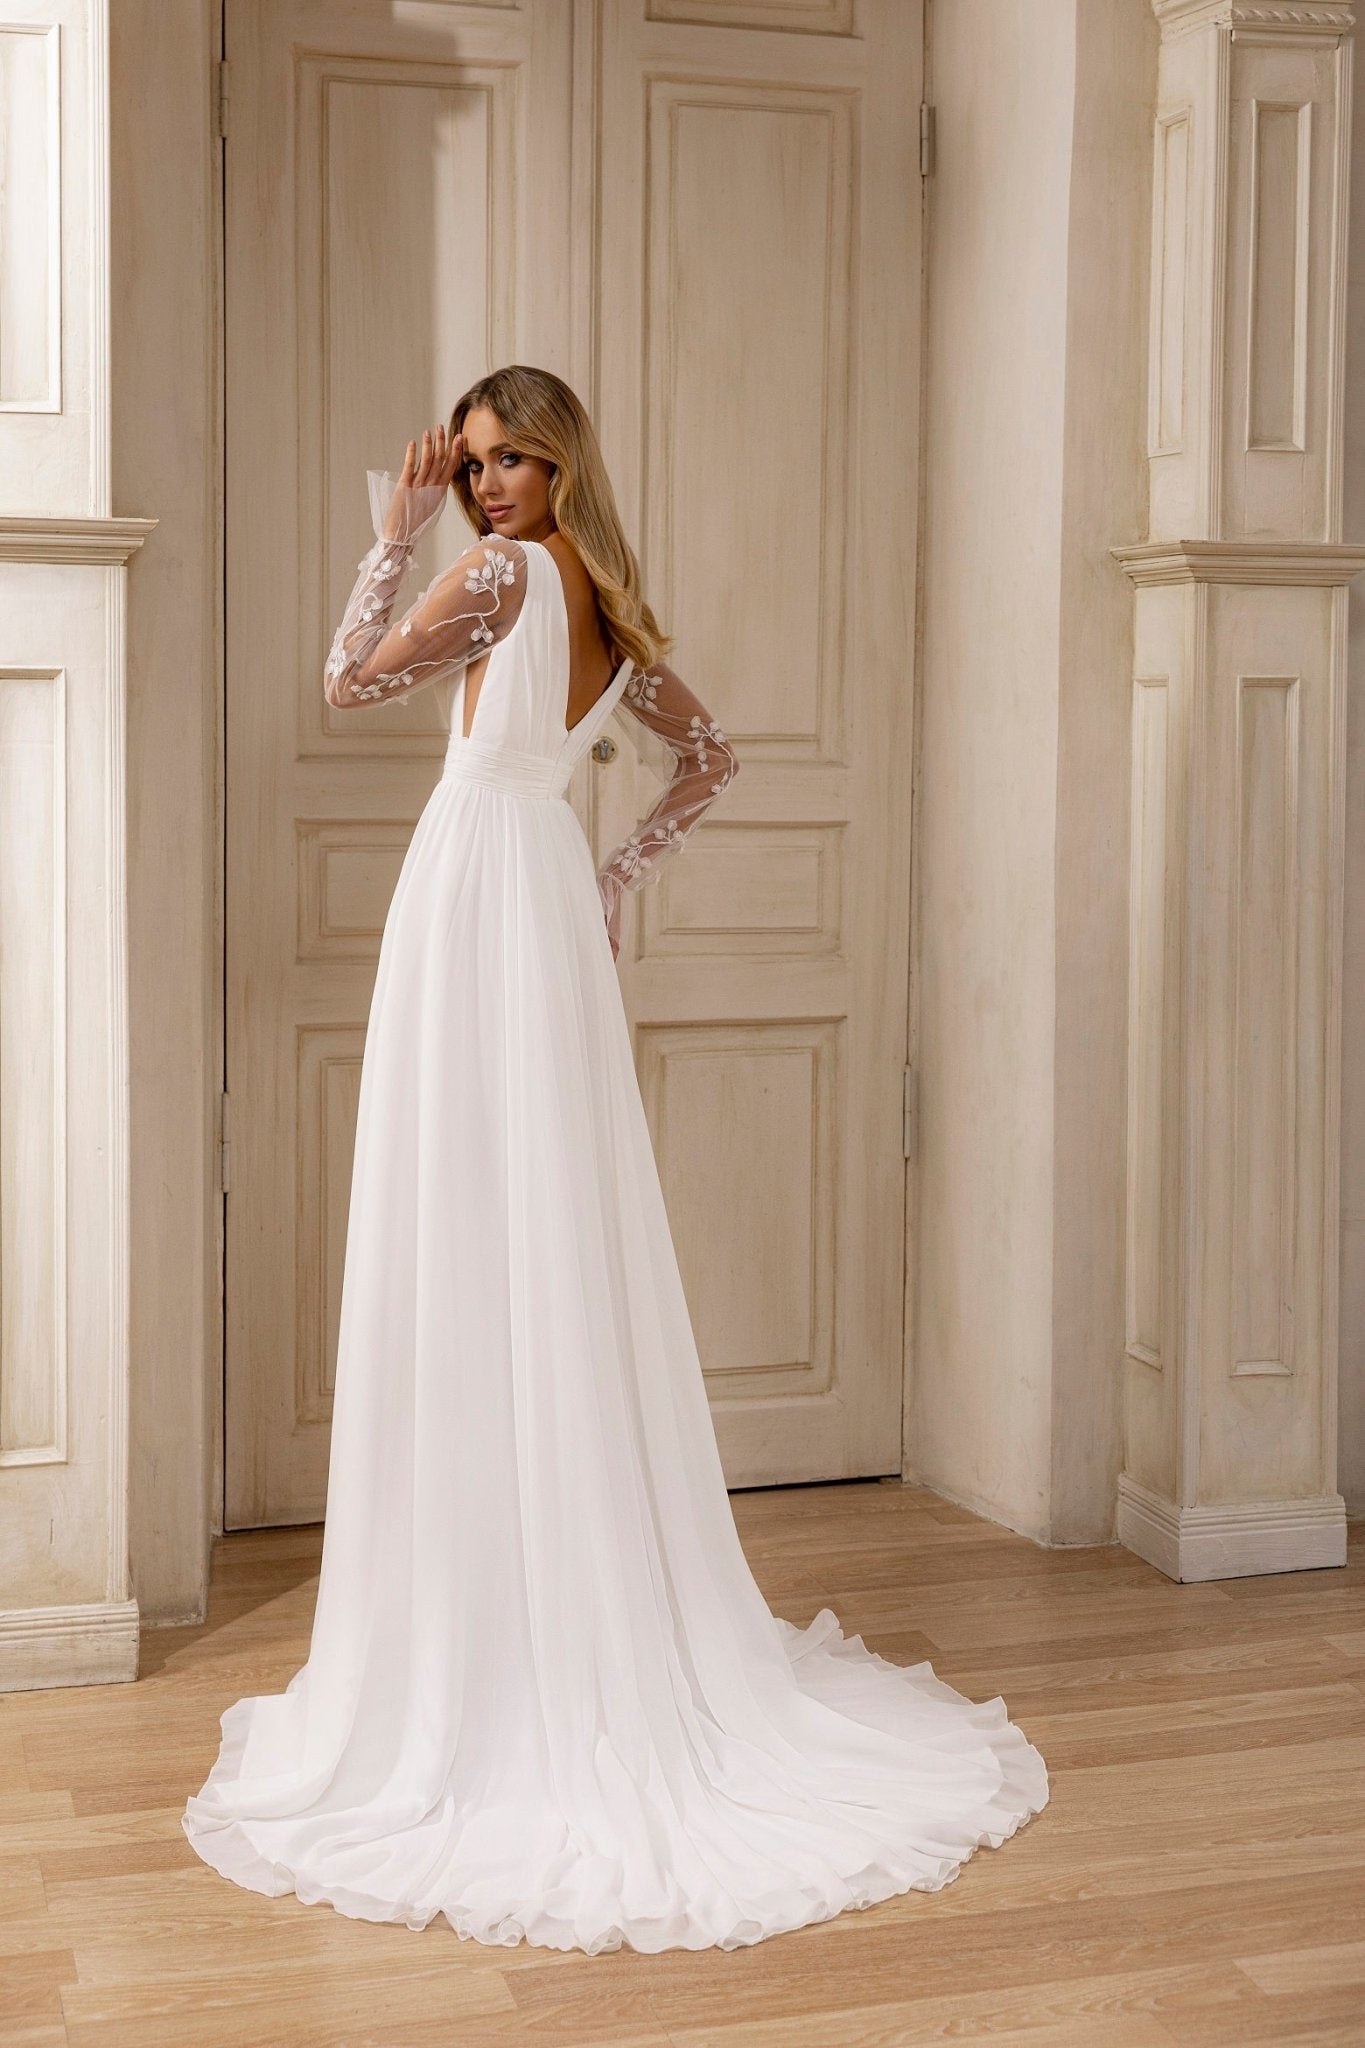 Sheer-Sleeved Deep V-Neck Wedding Dress with Floral Accents and Graceful Train - WonderlandByLilian